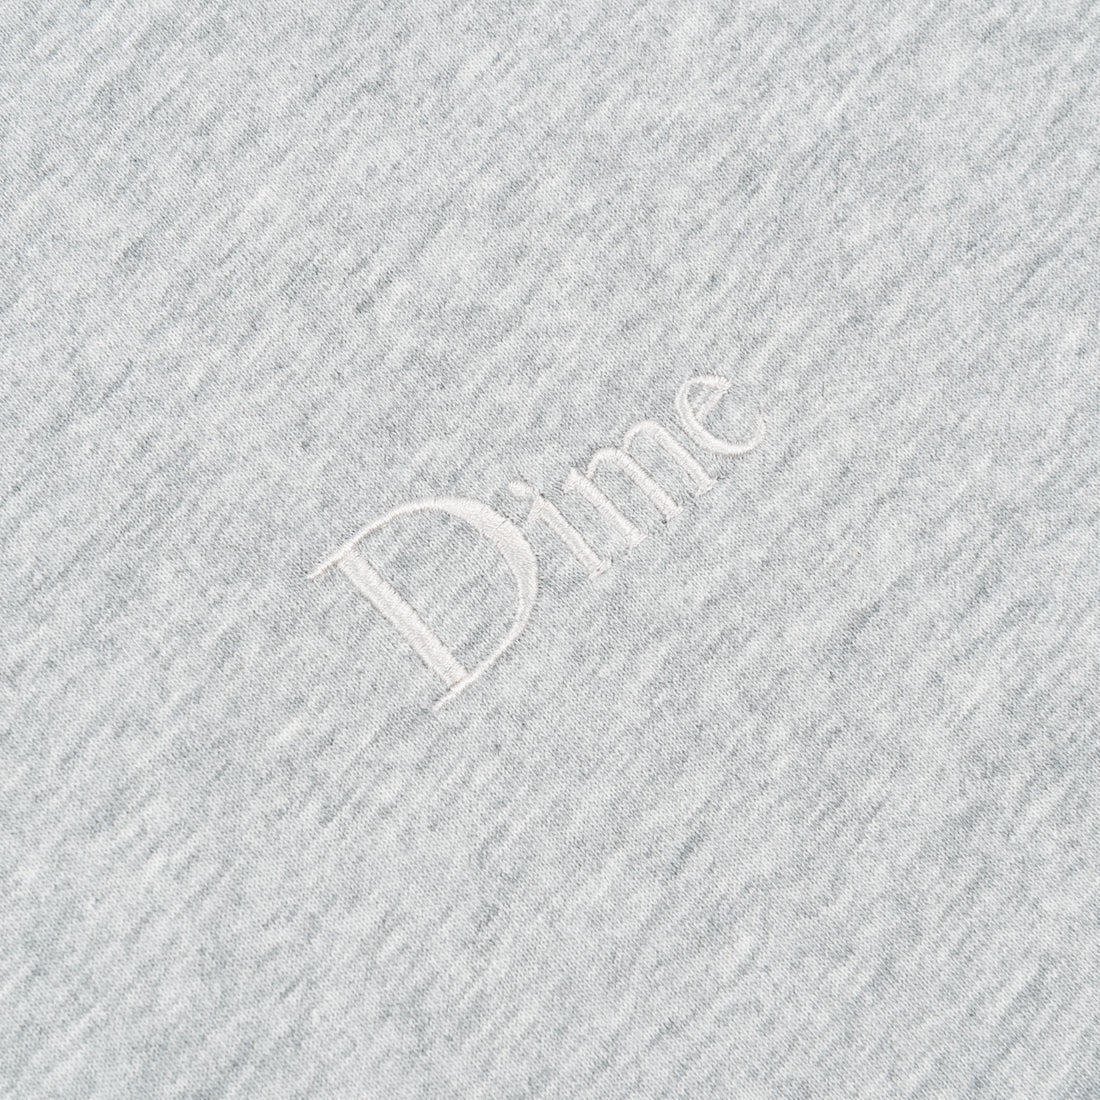 【Dime】Classic Small Logo Tee - Heather gray